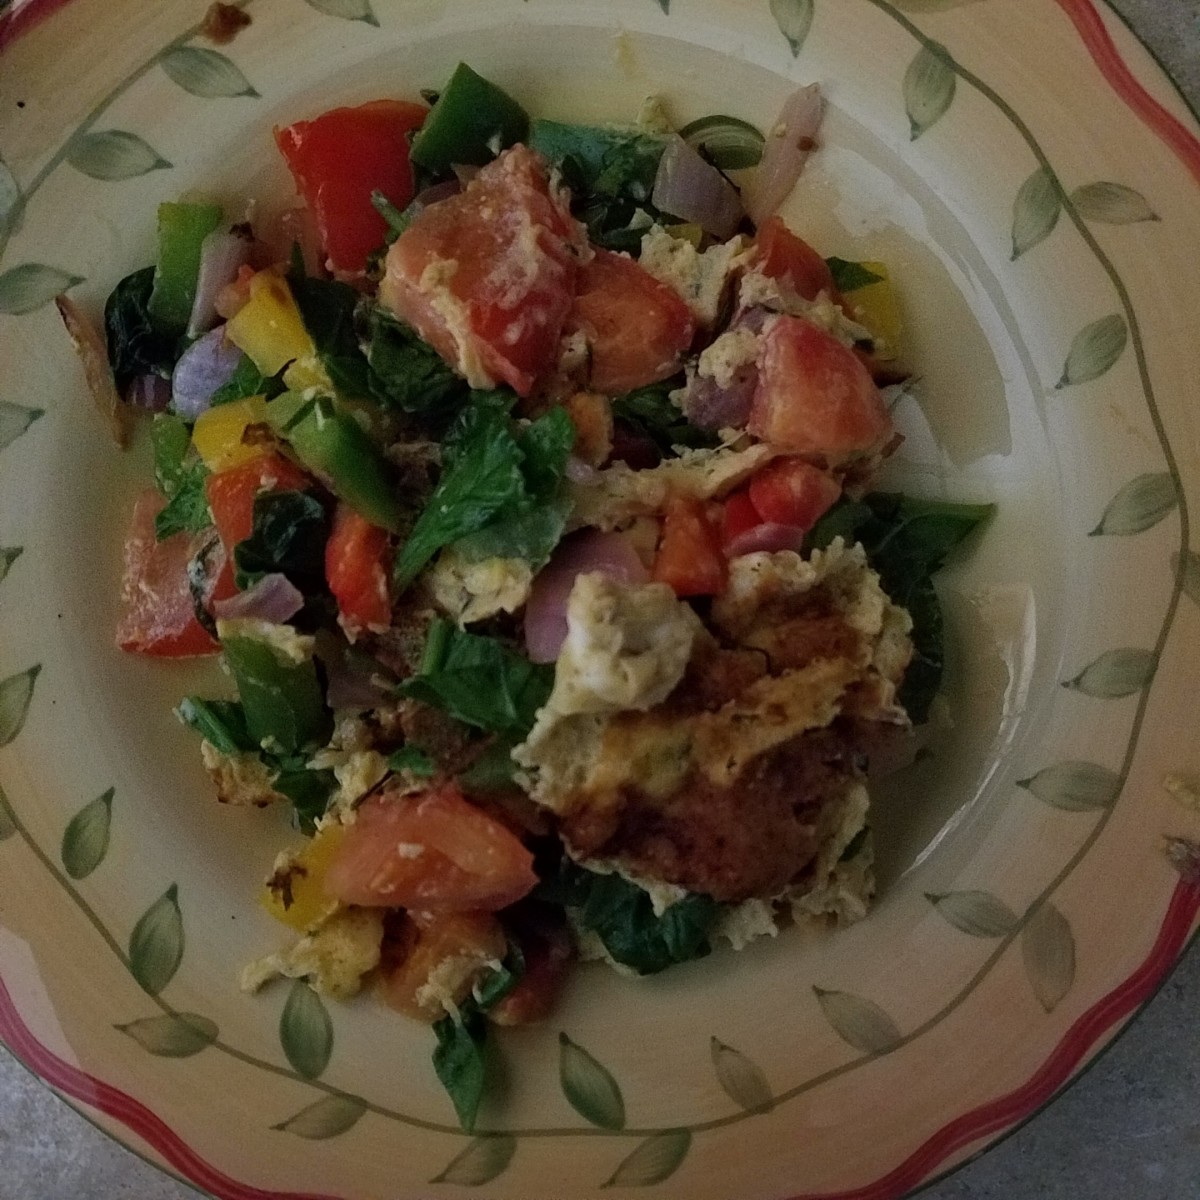 This delicious, colorful garden veggie omelet is for breakfast. Bon appetit!